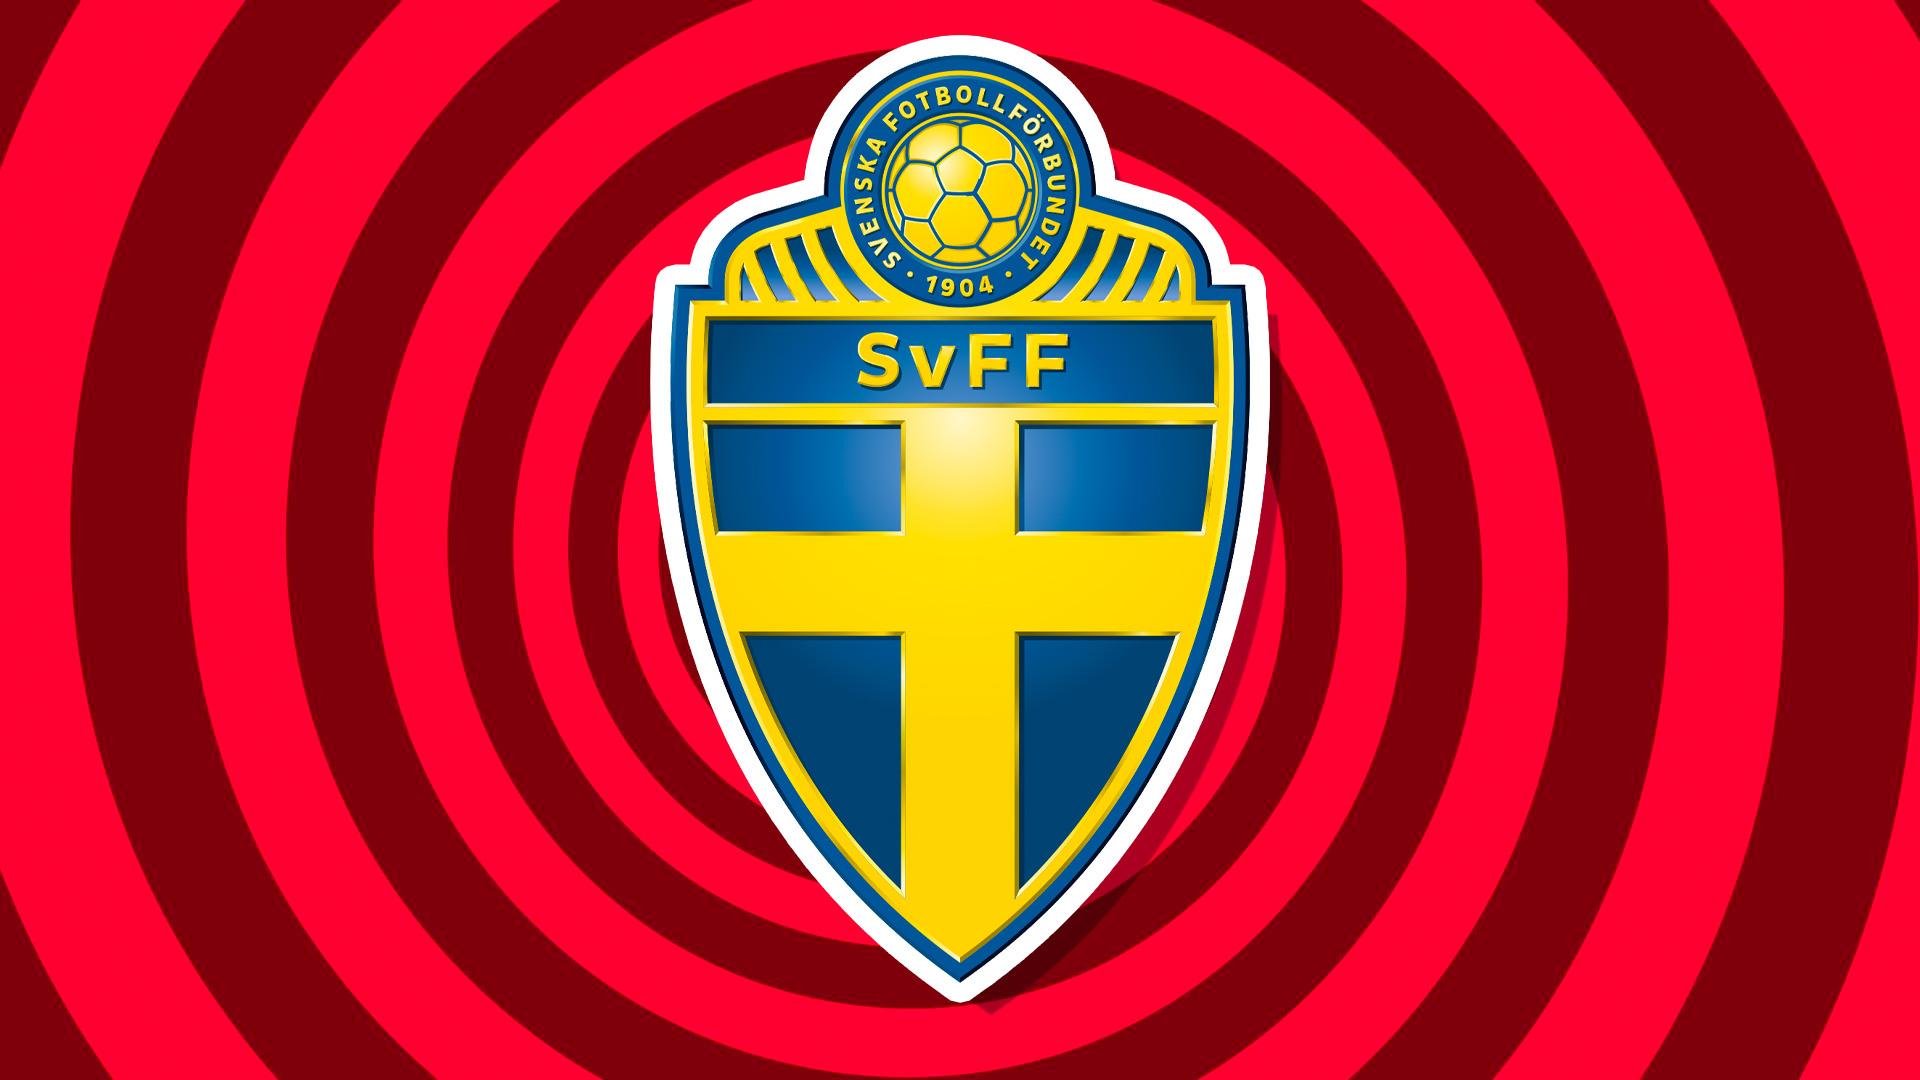 Sweden football badge